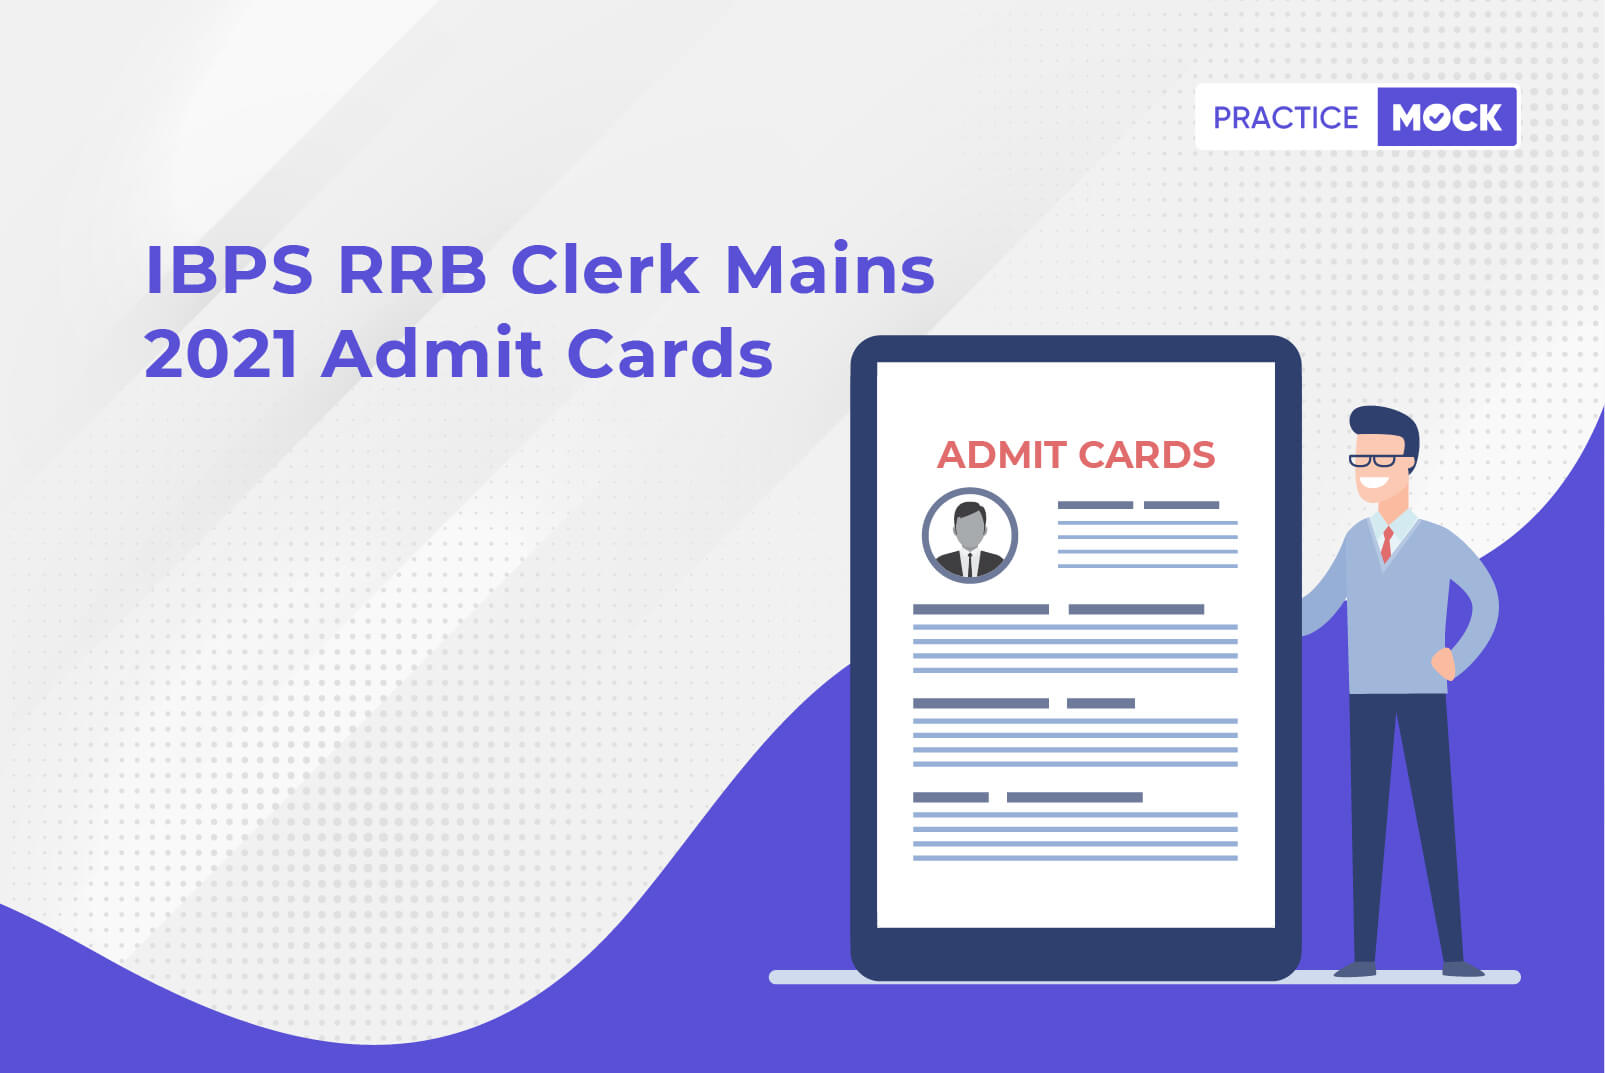 RRB Clerk mains admit cards